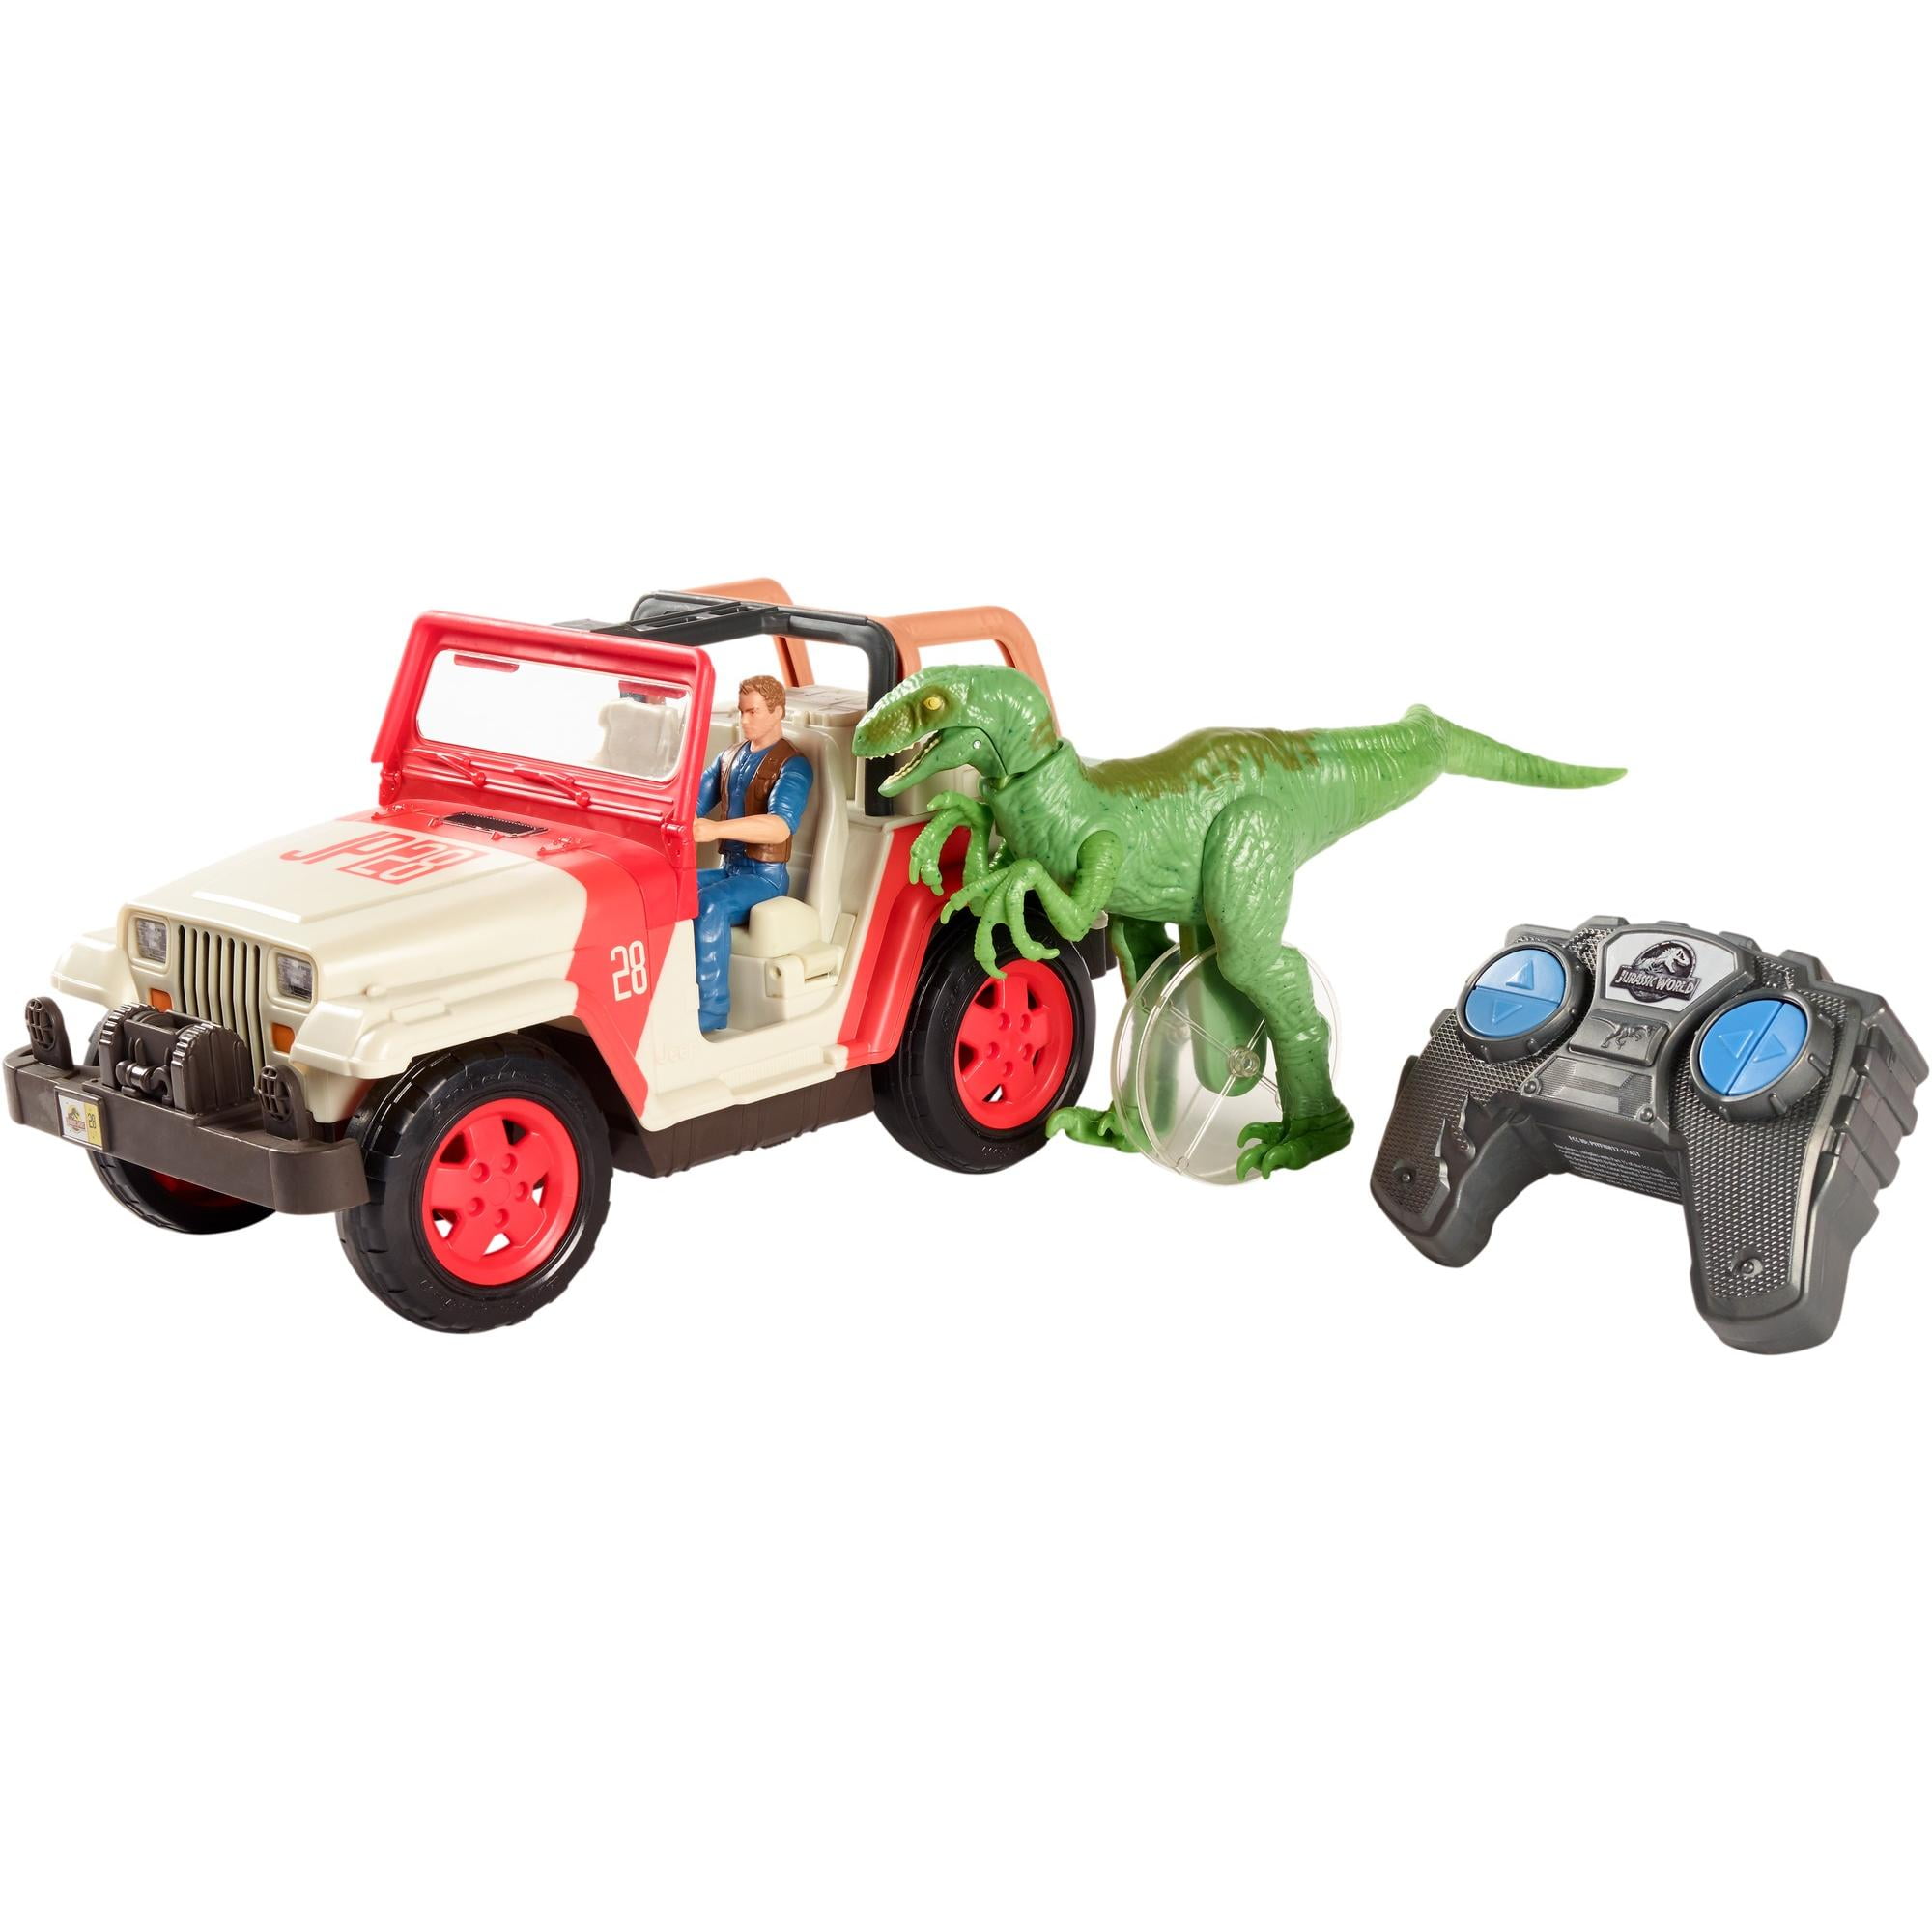 Jurassic World R/C Vehicle Raptor Attack RC - Deal - BrickSeek.